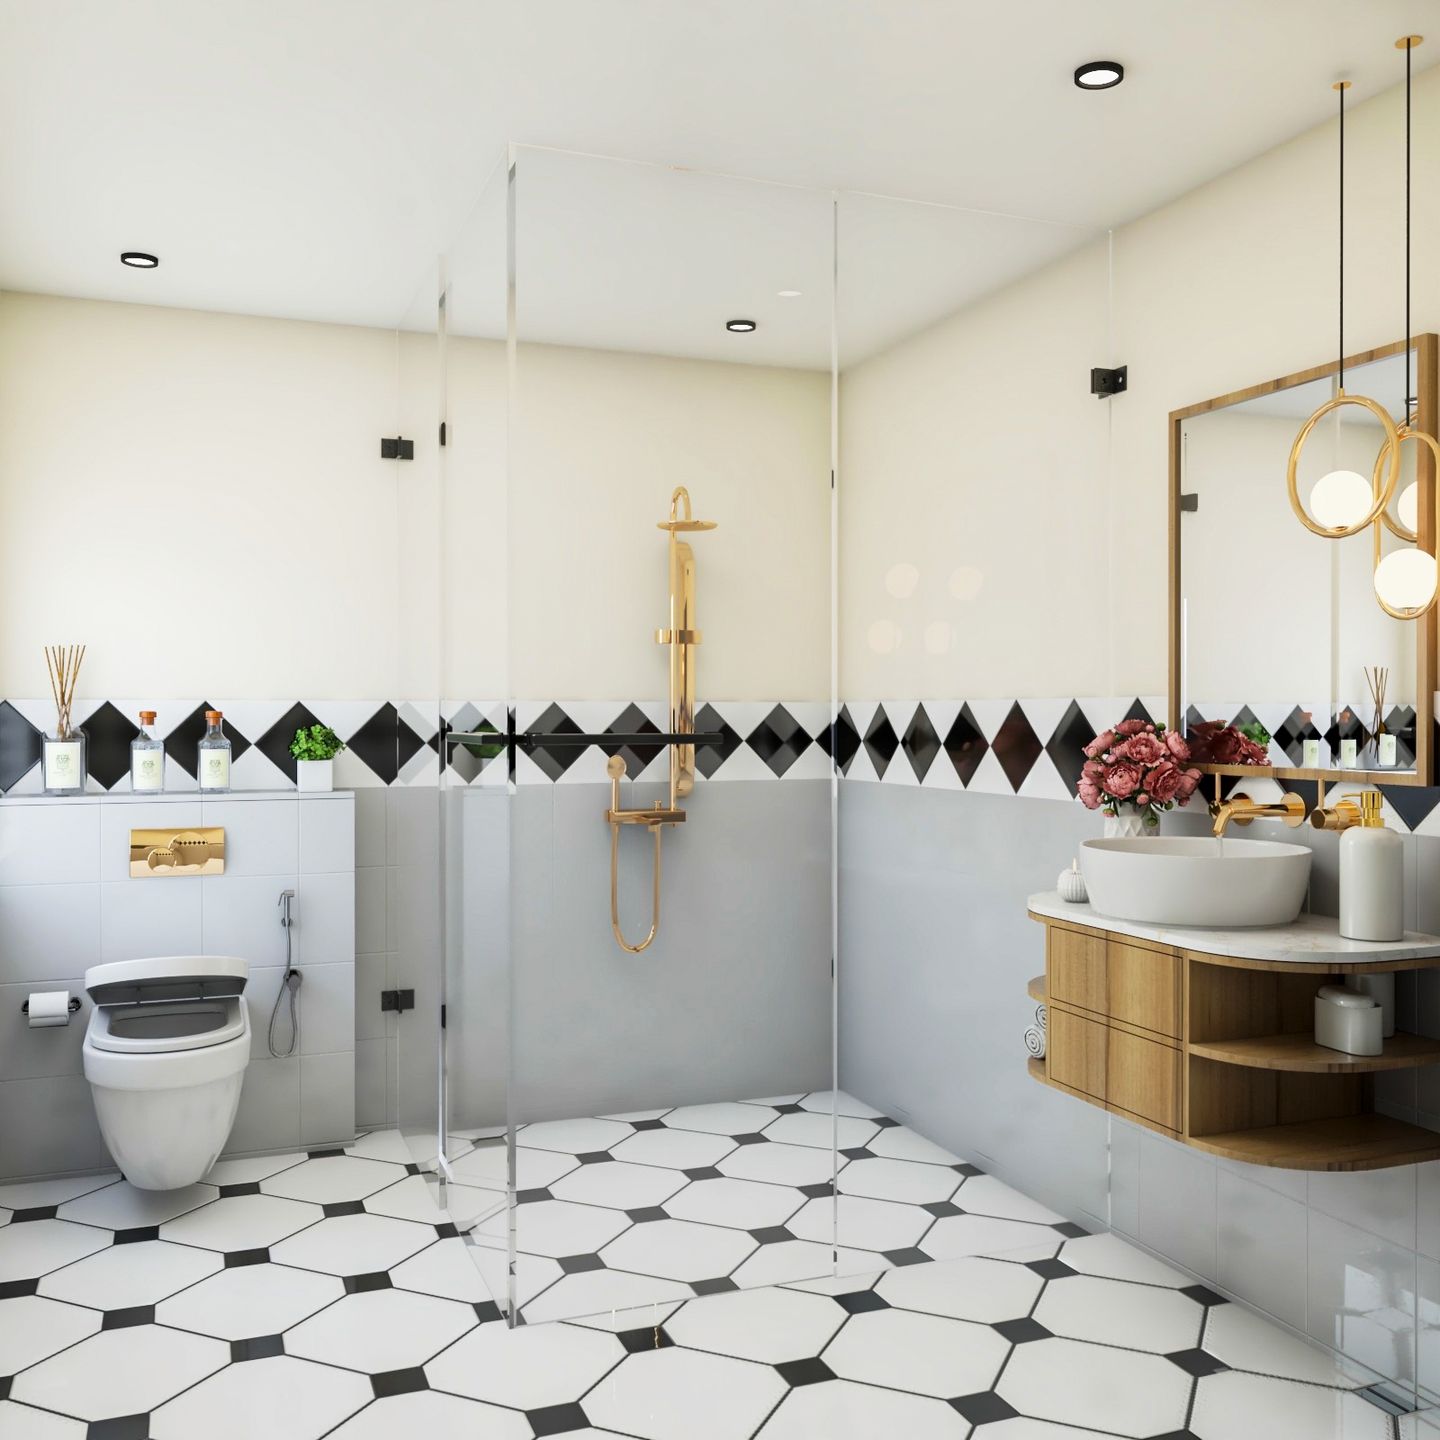 Bathroom Design With Hanging Lights - Livspace